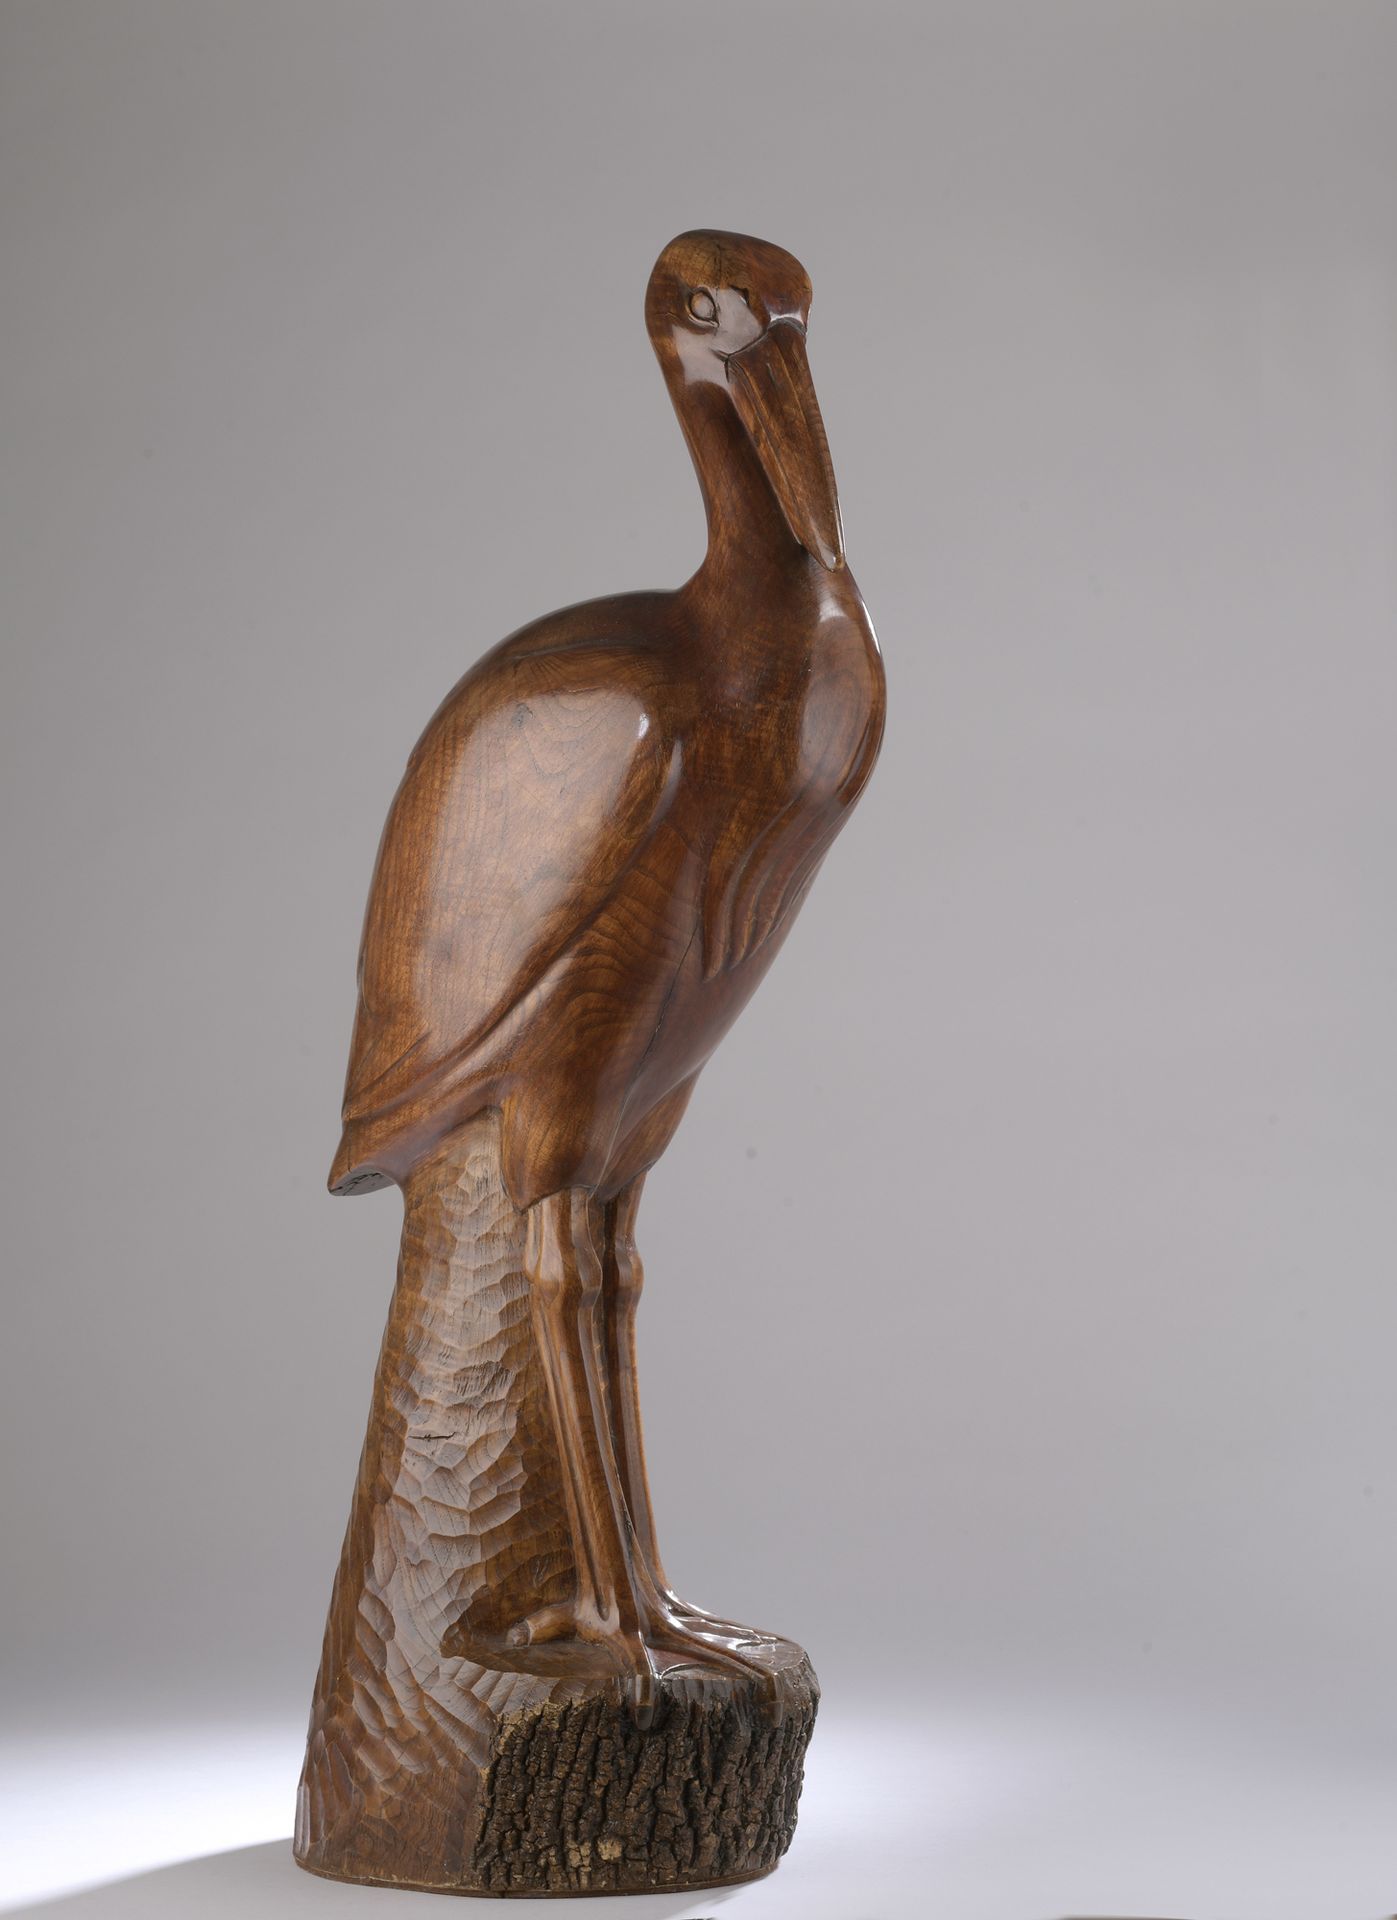 Null 弗朗索瓦-马丁内斯(1902-1986)

苍鹭

关于1935年。

天然木材的直接尺寸的雕塑。

签名：F. Martinez。

H.79厘米